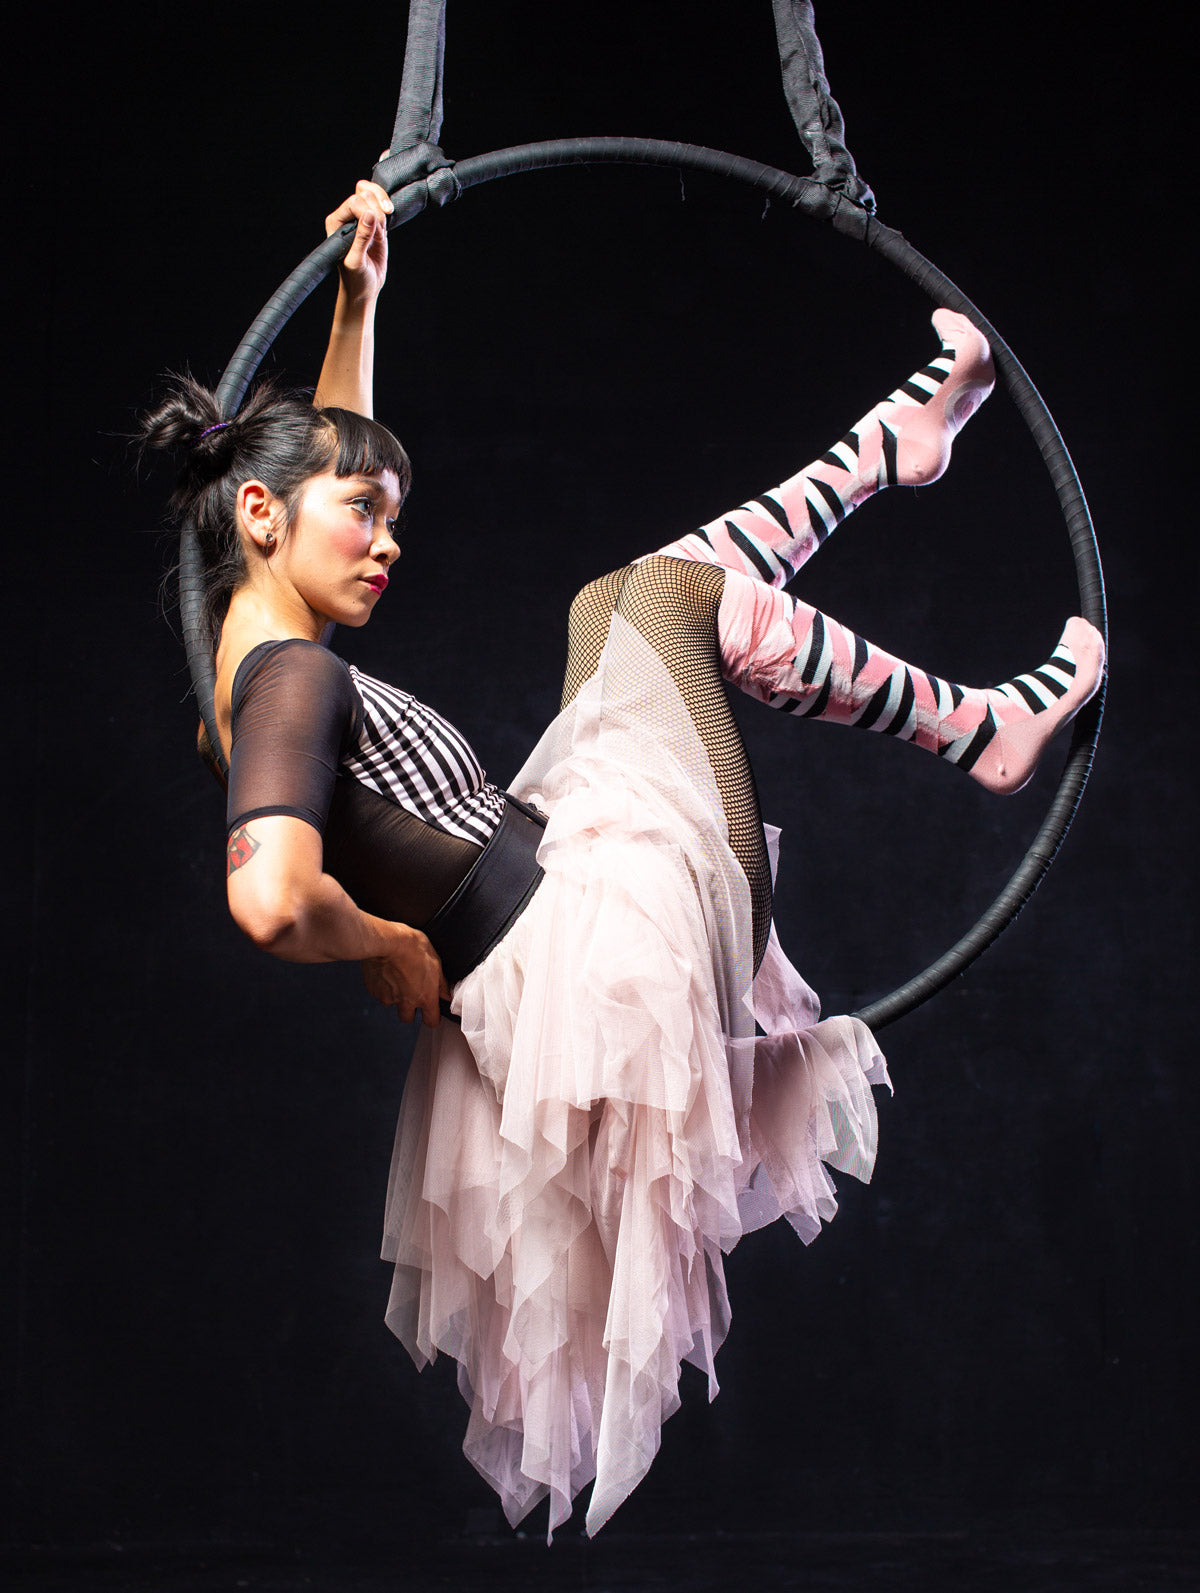 Aerial acrobat wears a tutu skirt with ballet slipper socks while sitting on an aerial hoop